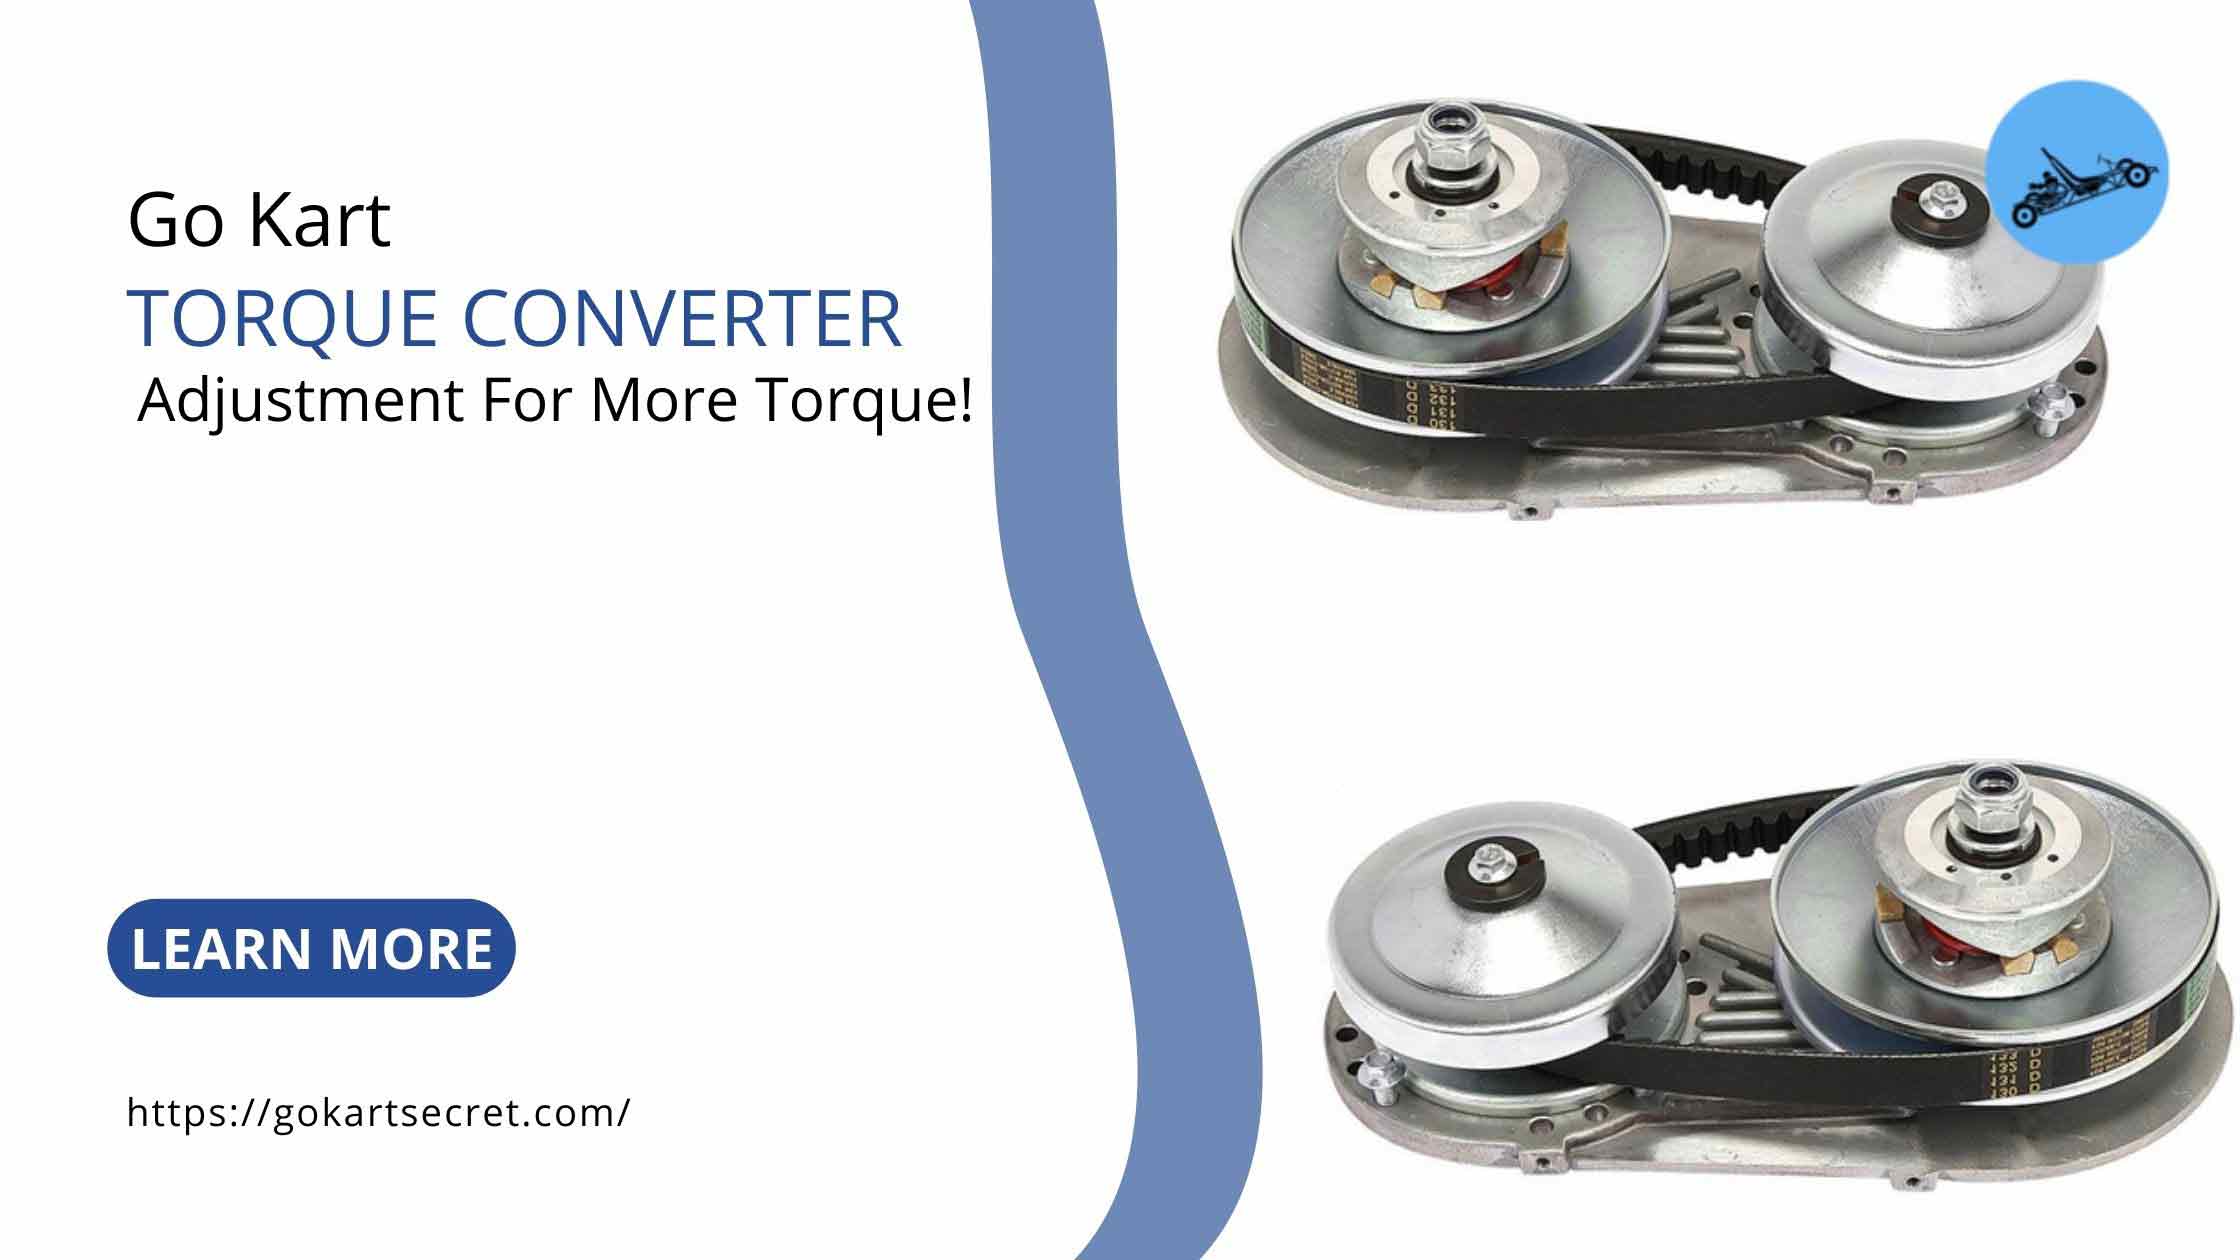 Go Kart Torque Converter Adjustment For More Torque